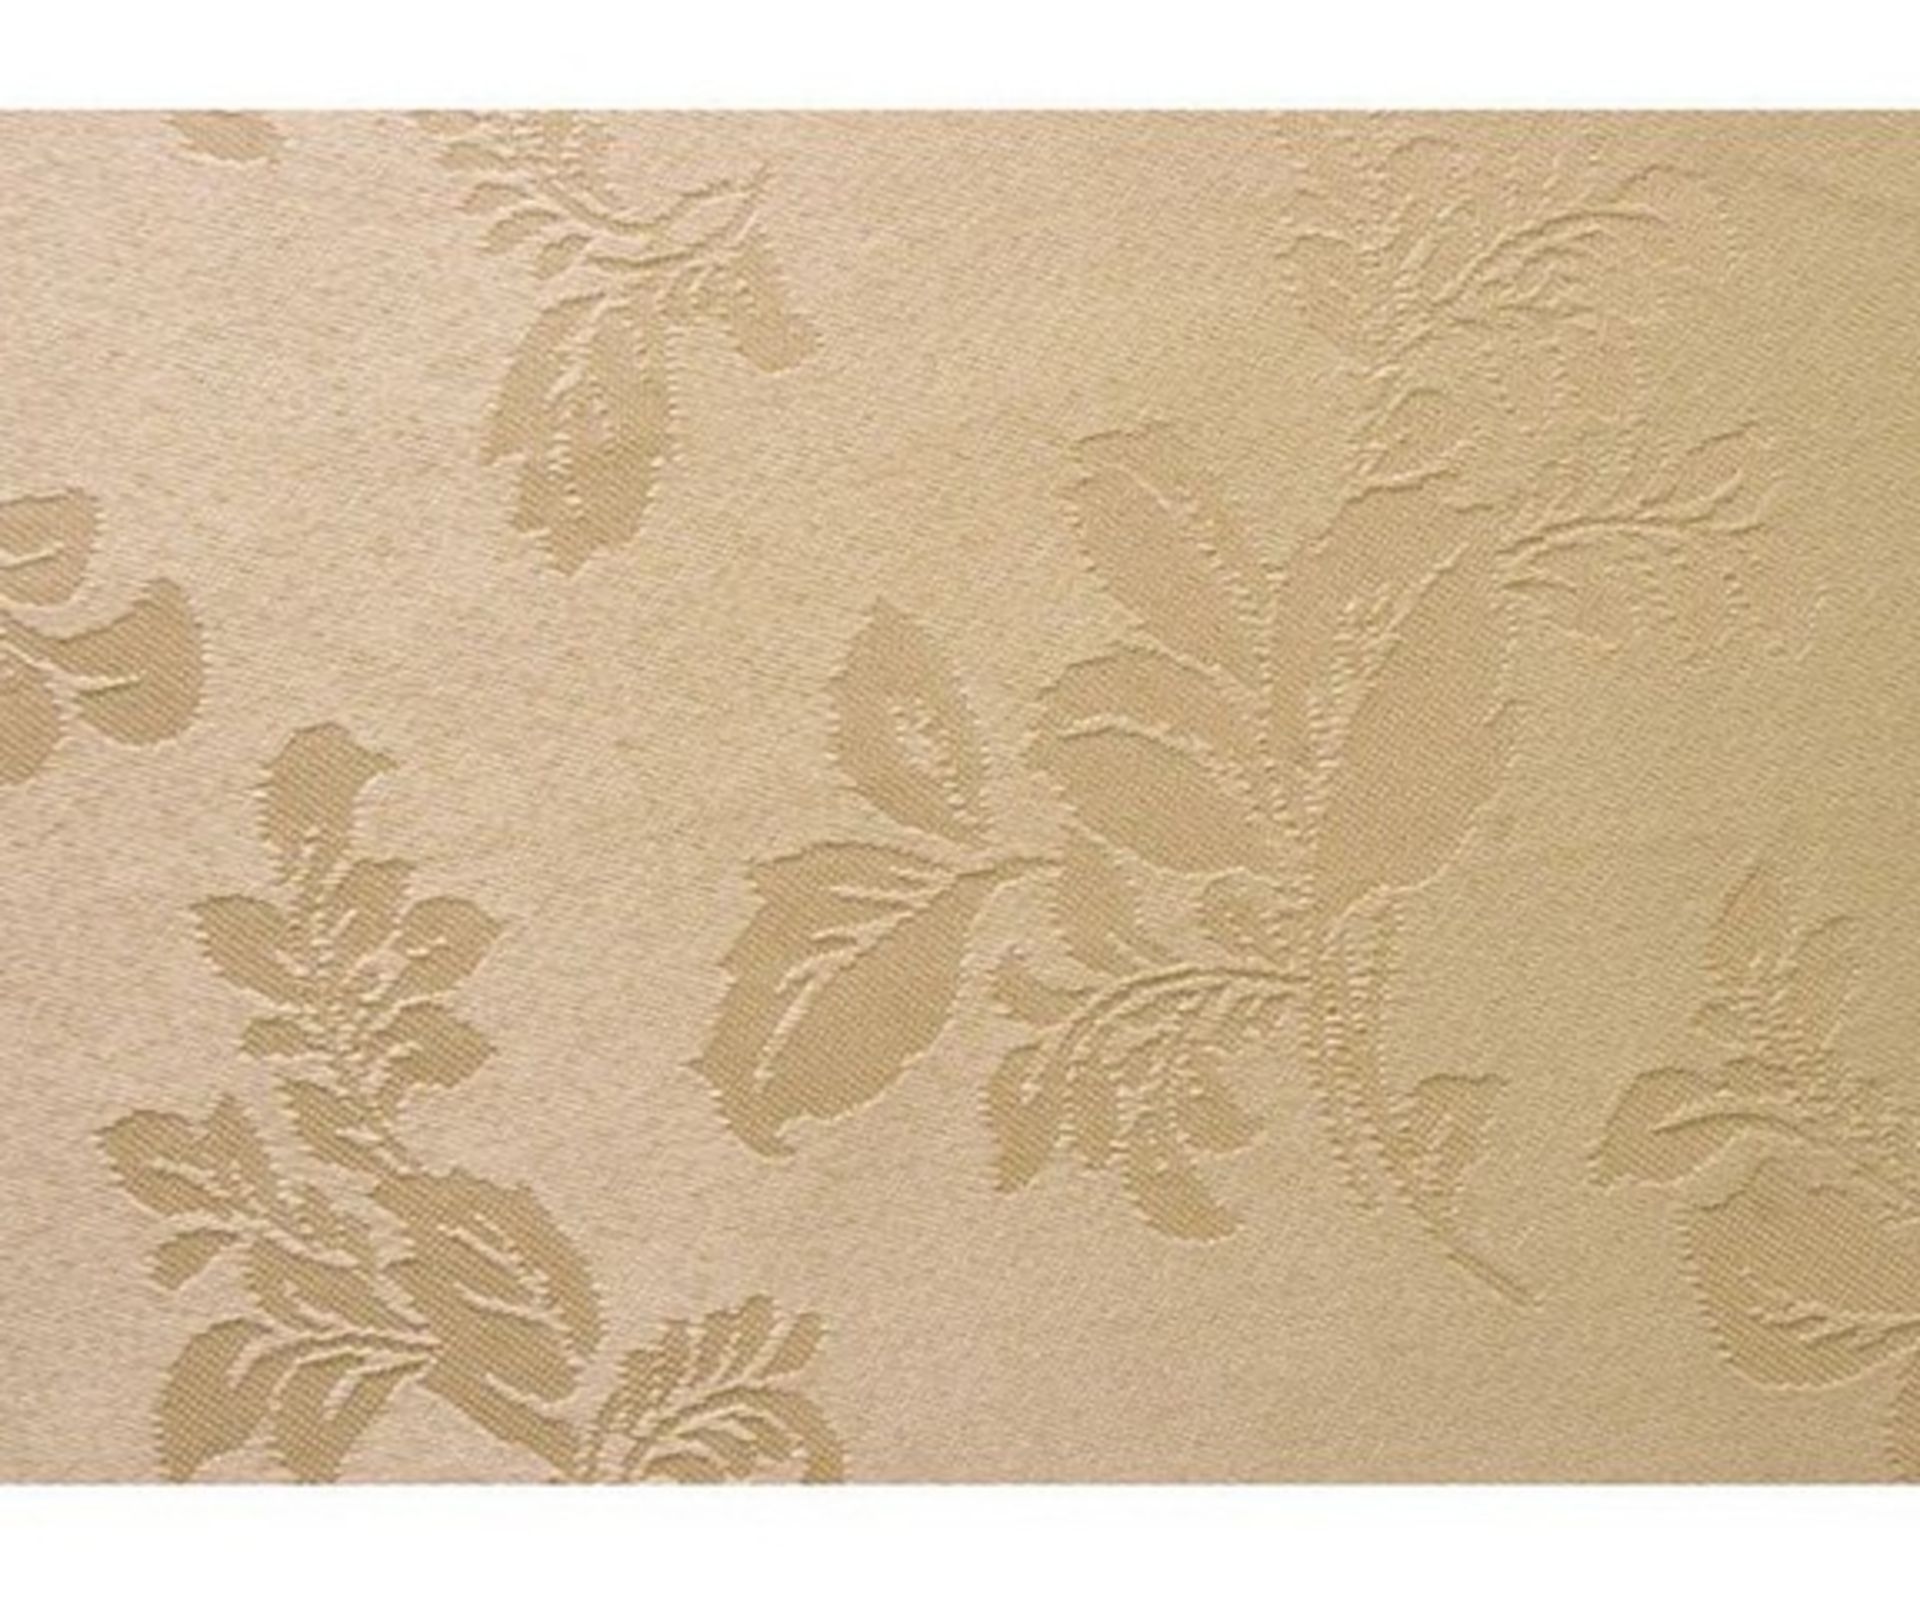 + VAT Brand New Luxury Stain Resistant Linen Table Cloth 160 x 210cm Gold - ISP £34.99 (islshop-UK) - Image 2 of 2